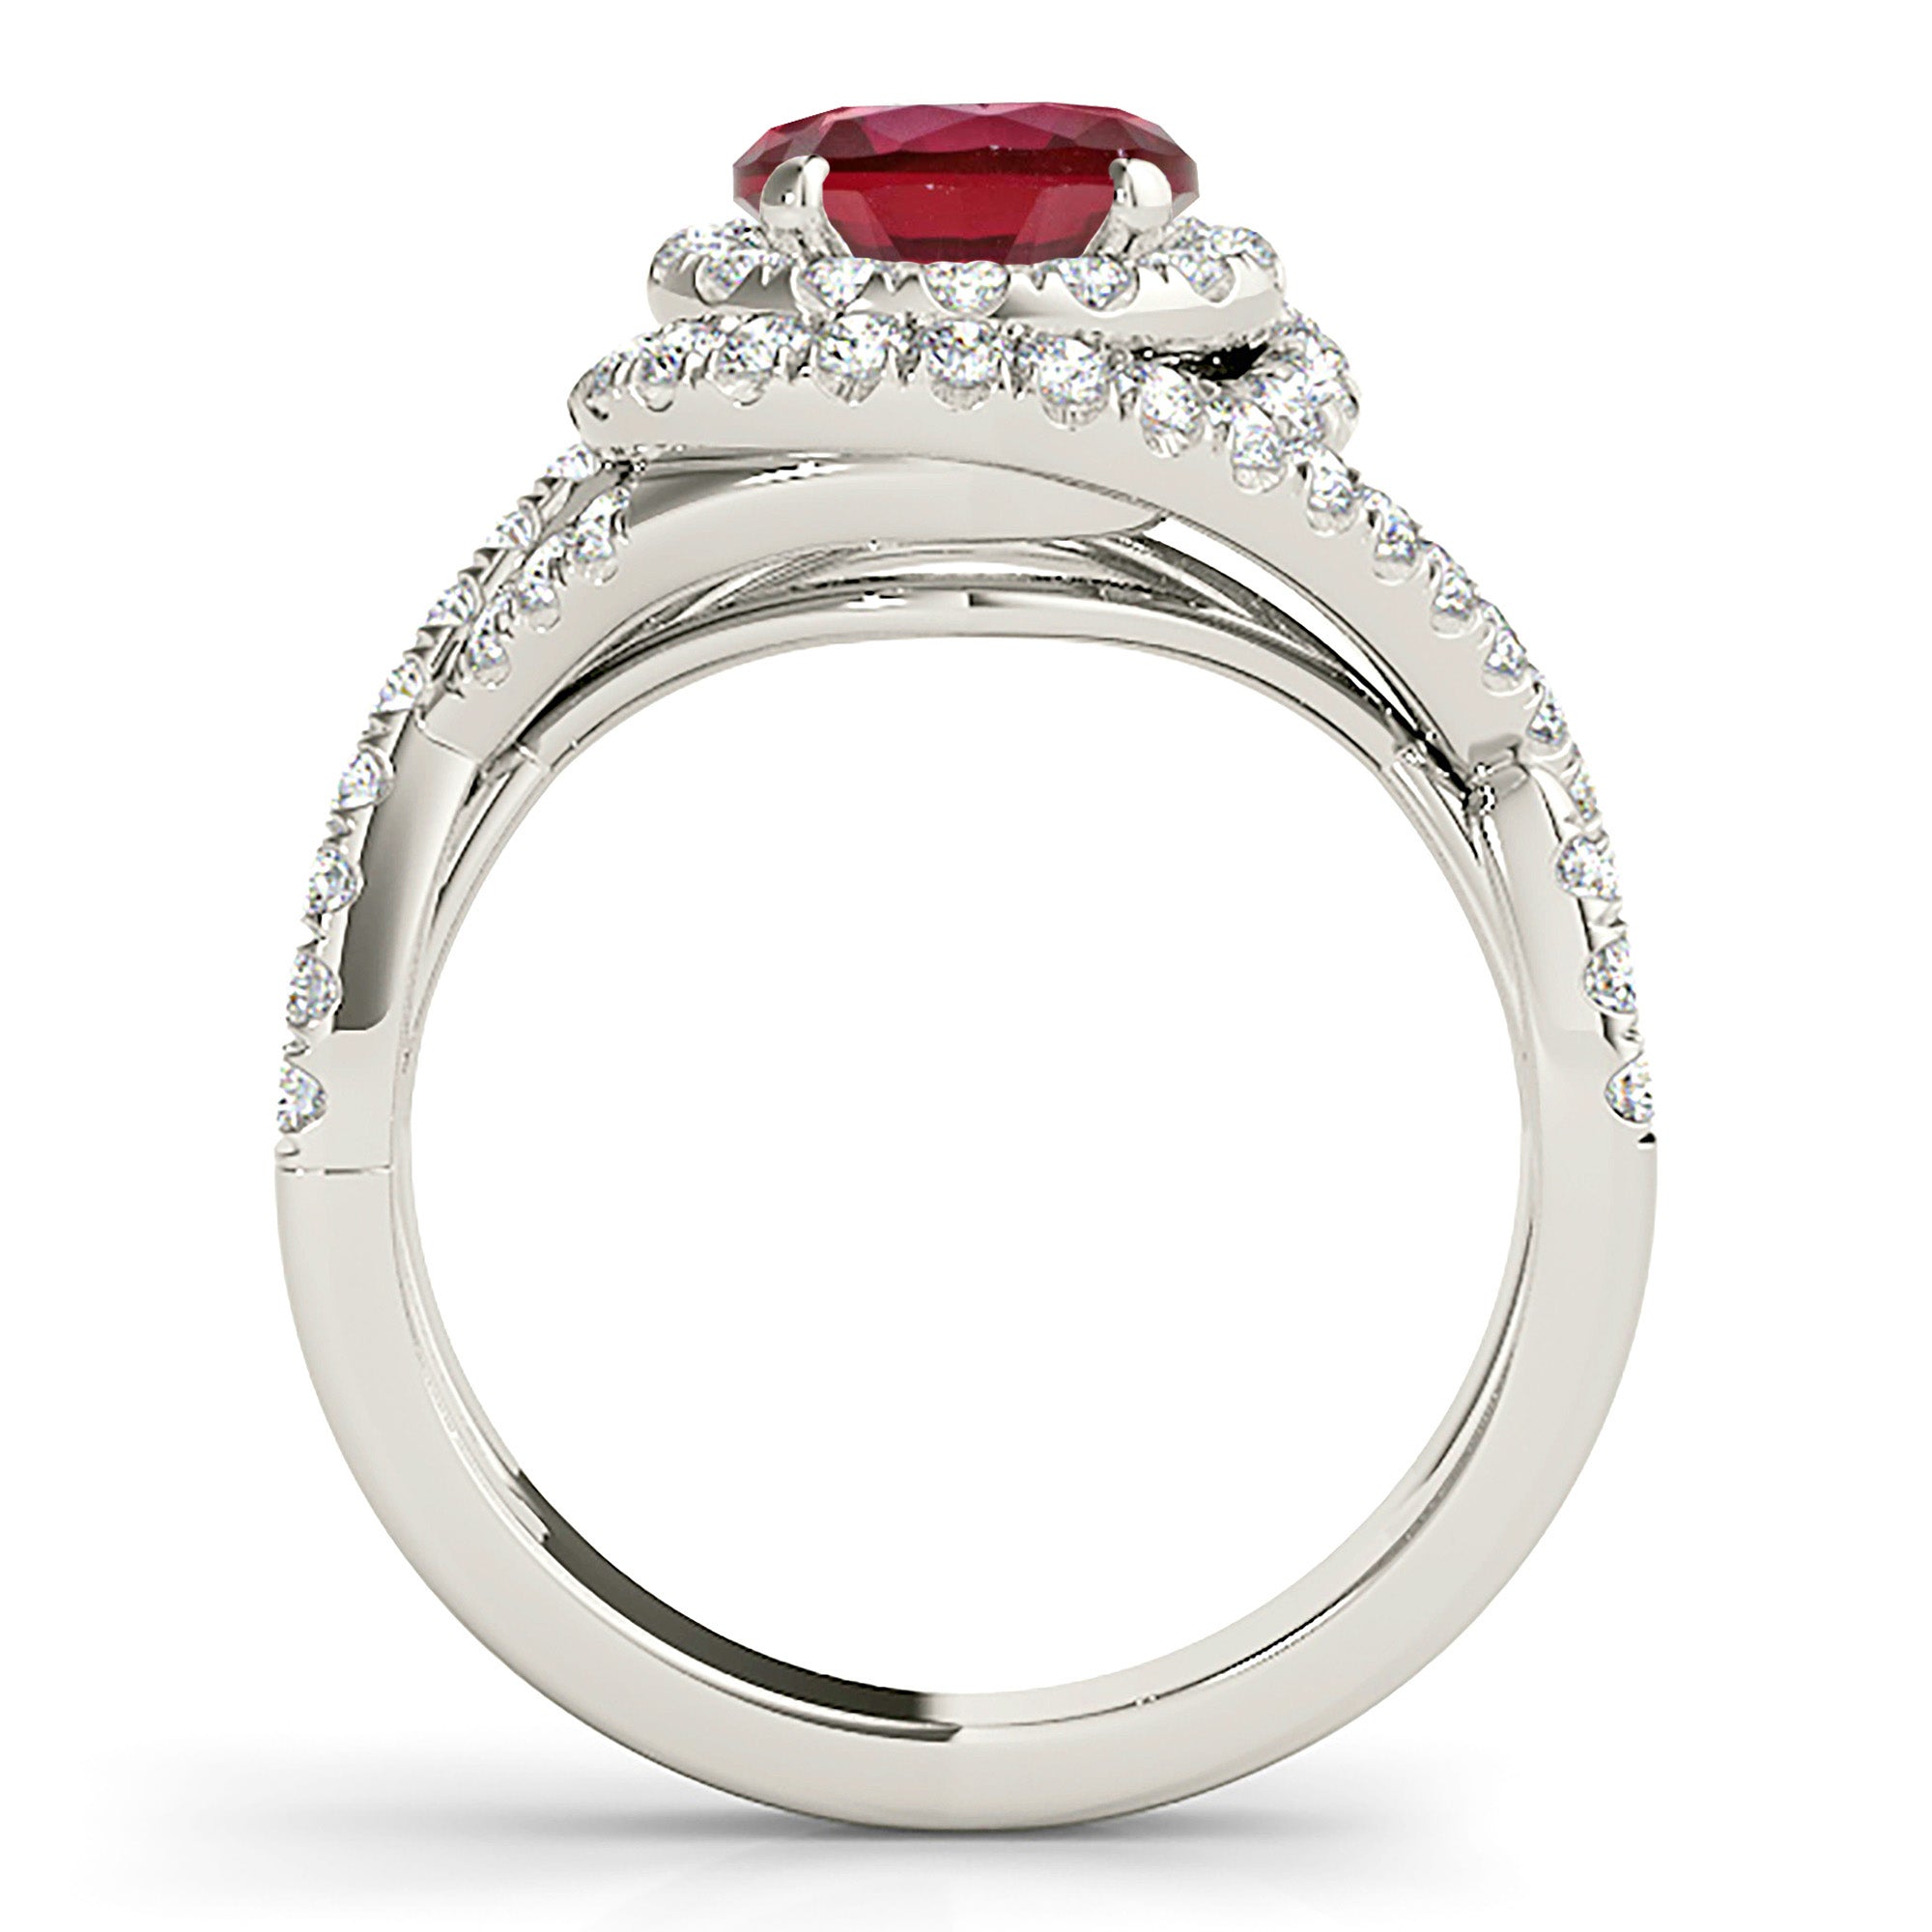 1.35 ct. Genuine Ruby Ring With 0.70 ctw. Diamond Wrap Around Halo And Twist Diamond Band-in 14K/18K White, Yellow, Rose Gold and Platinum - Christmas Jewelry Gift -VIRABYANI